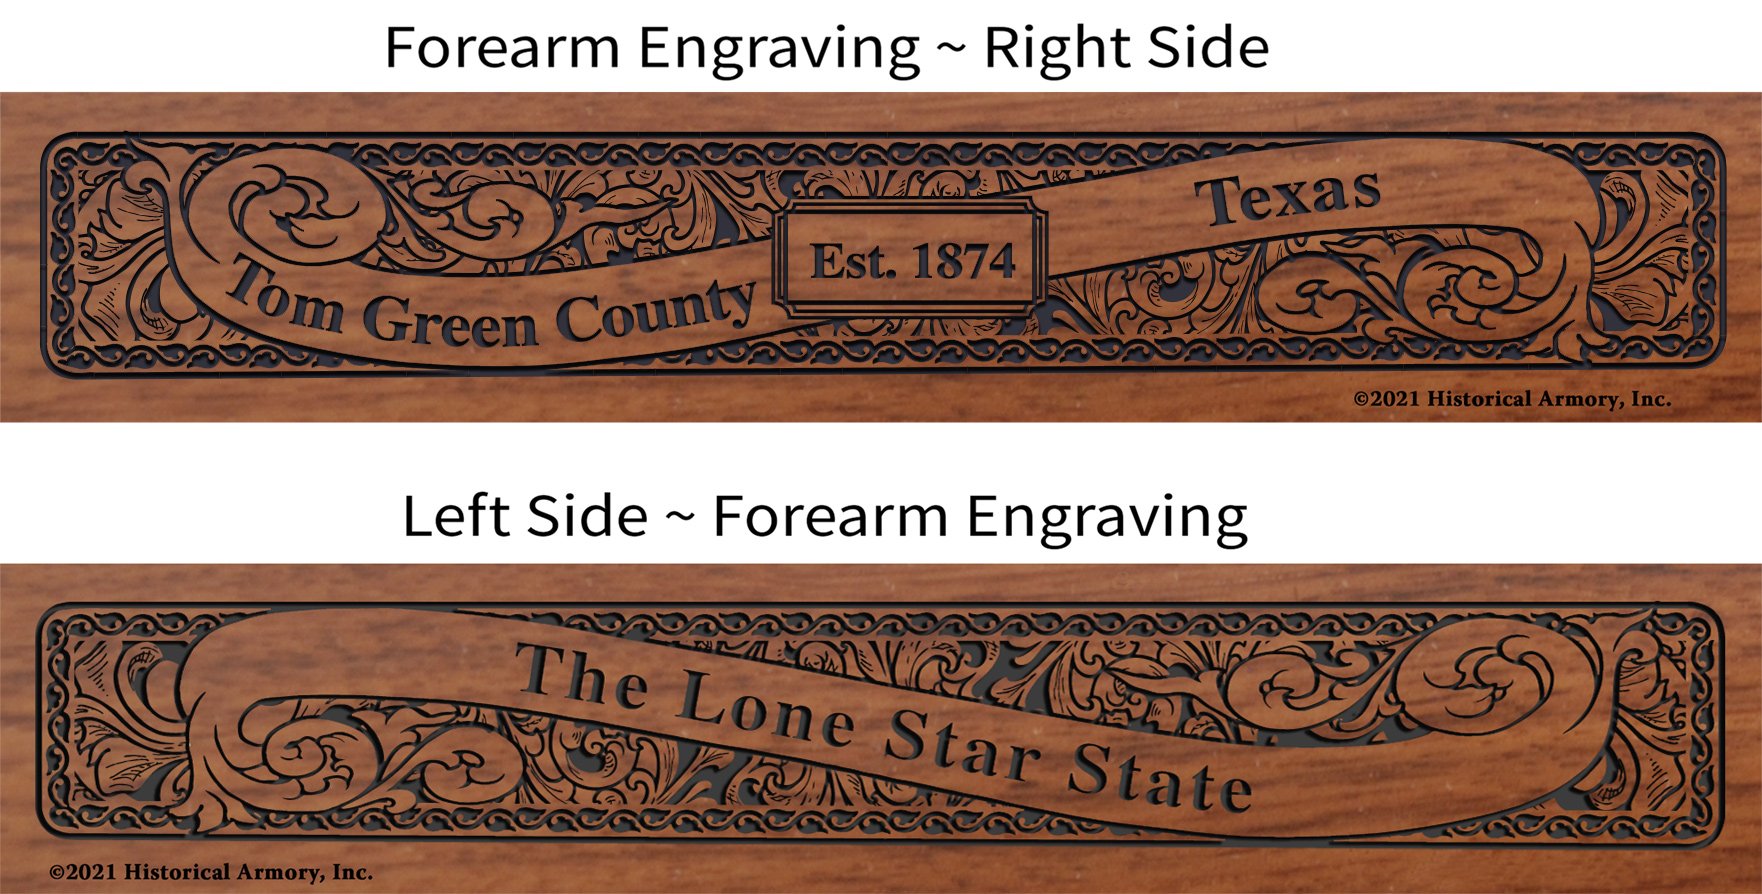 Tom Green County Texas Establishment and Motto History Engraved Rifle Forearm